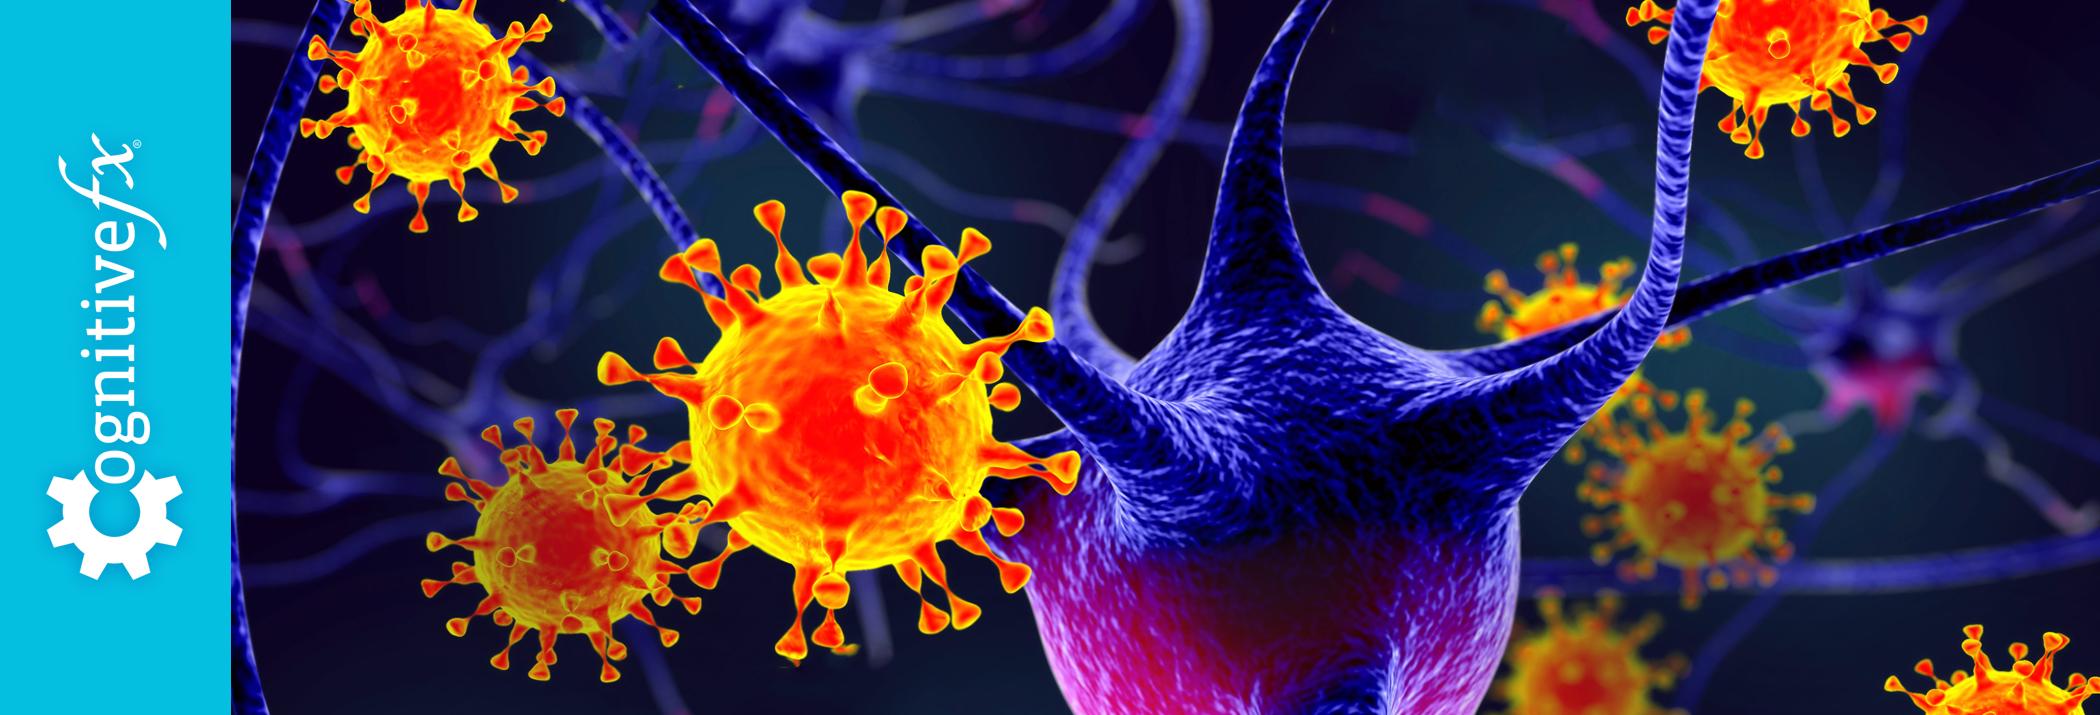 Encephalitis and Cytokines: When Viruses Like COVID-19 Have Long-Term Effects on the Brain